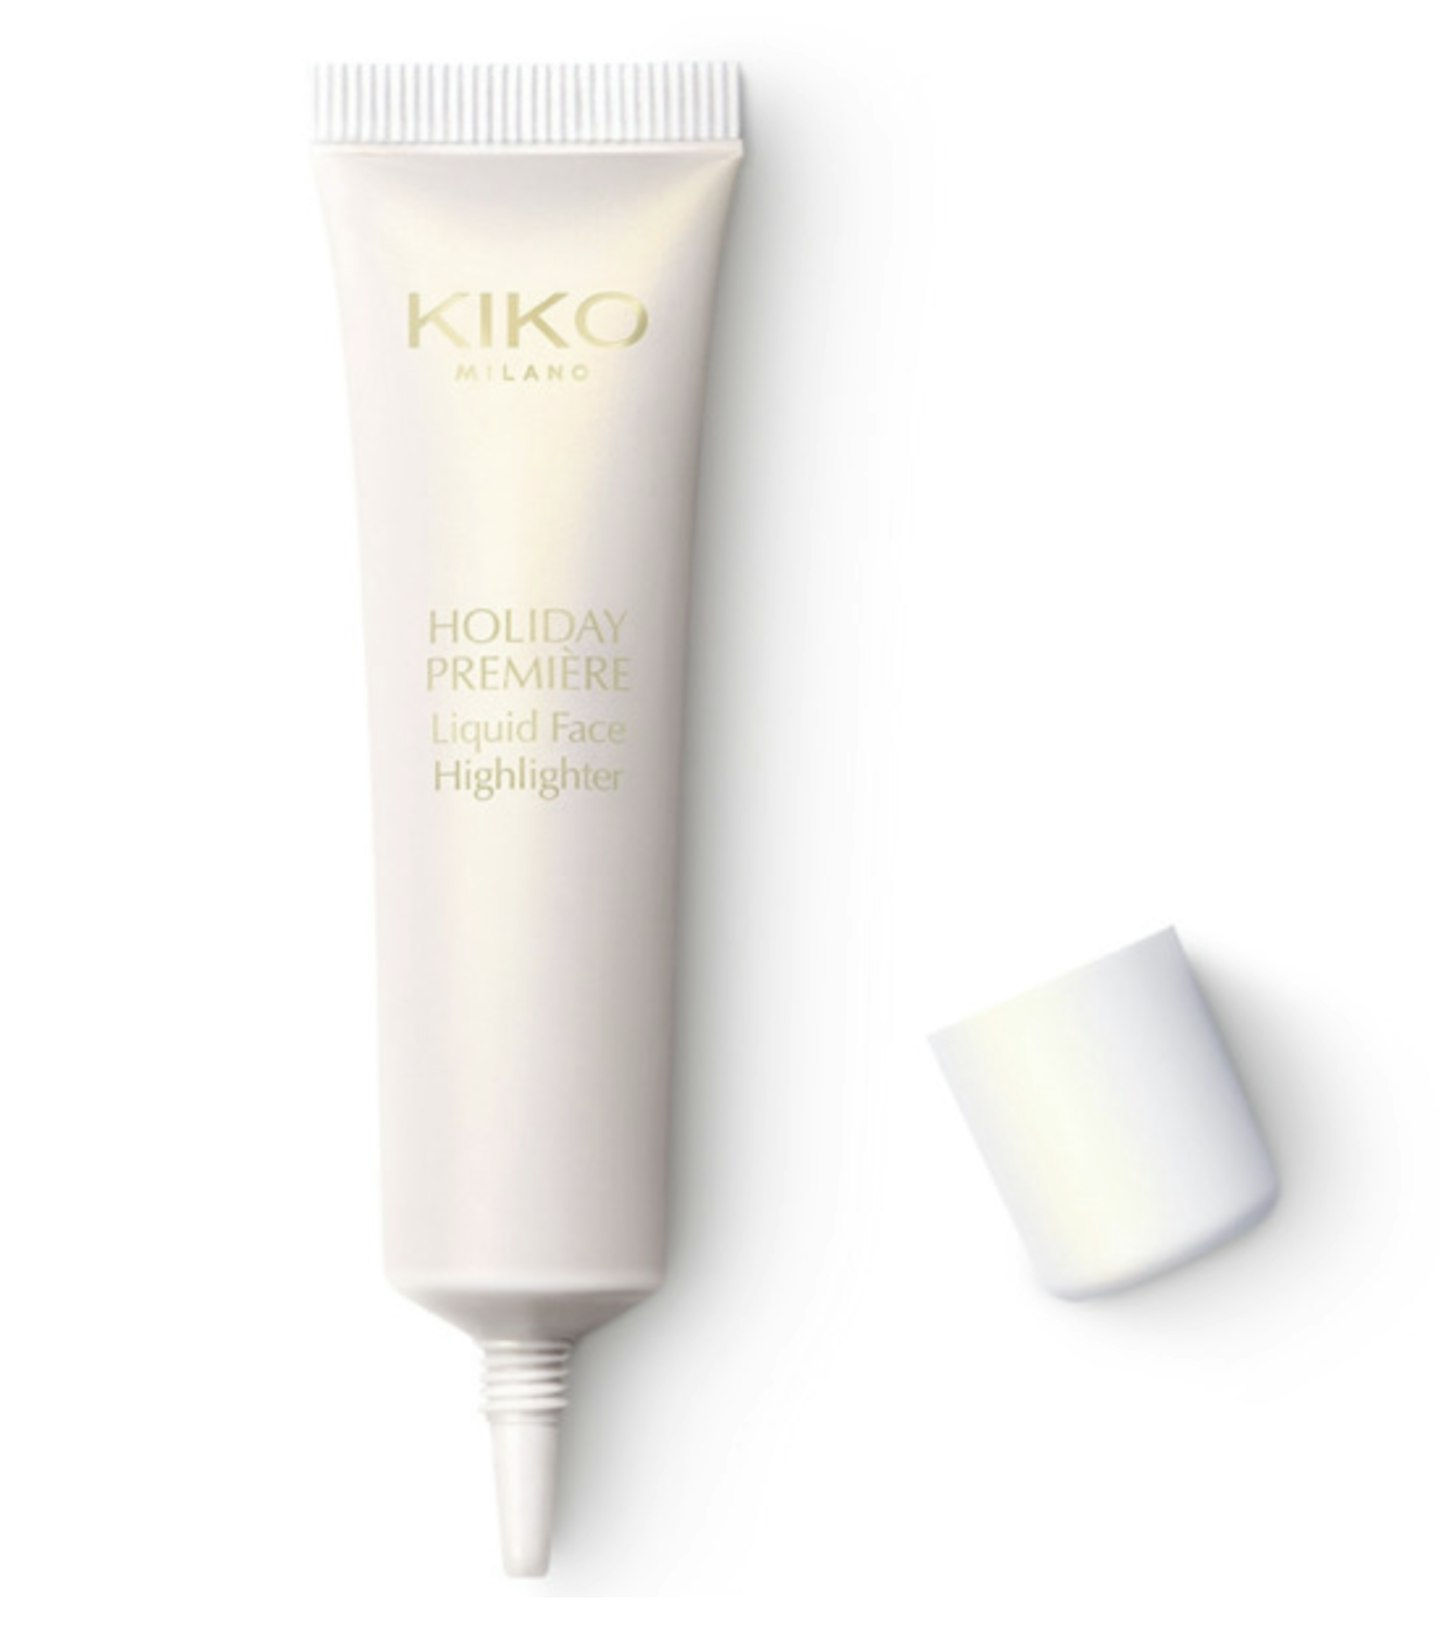 KIKO Holiday Première Liquid Face Highlighter